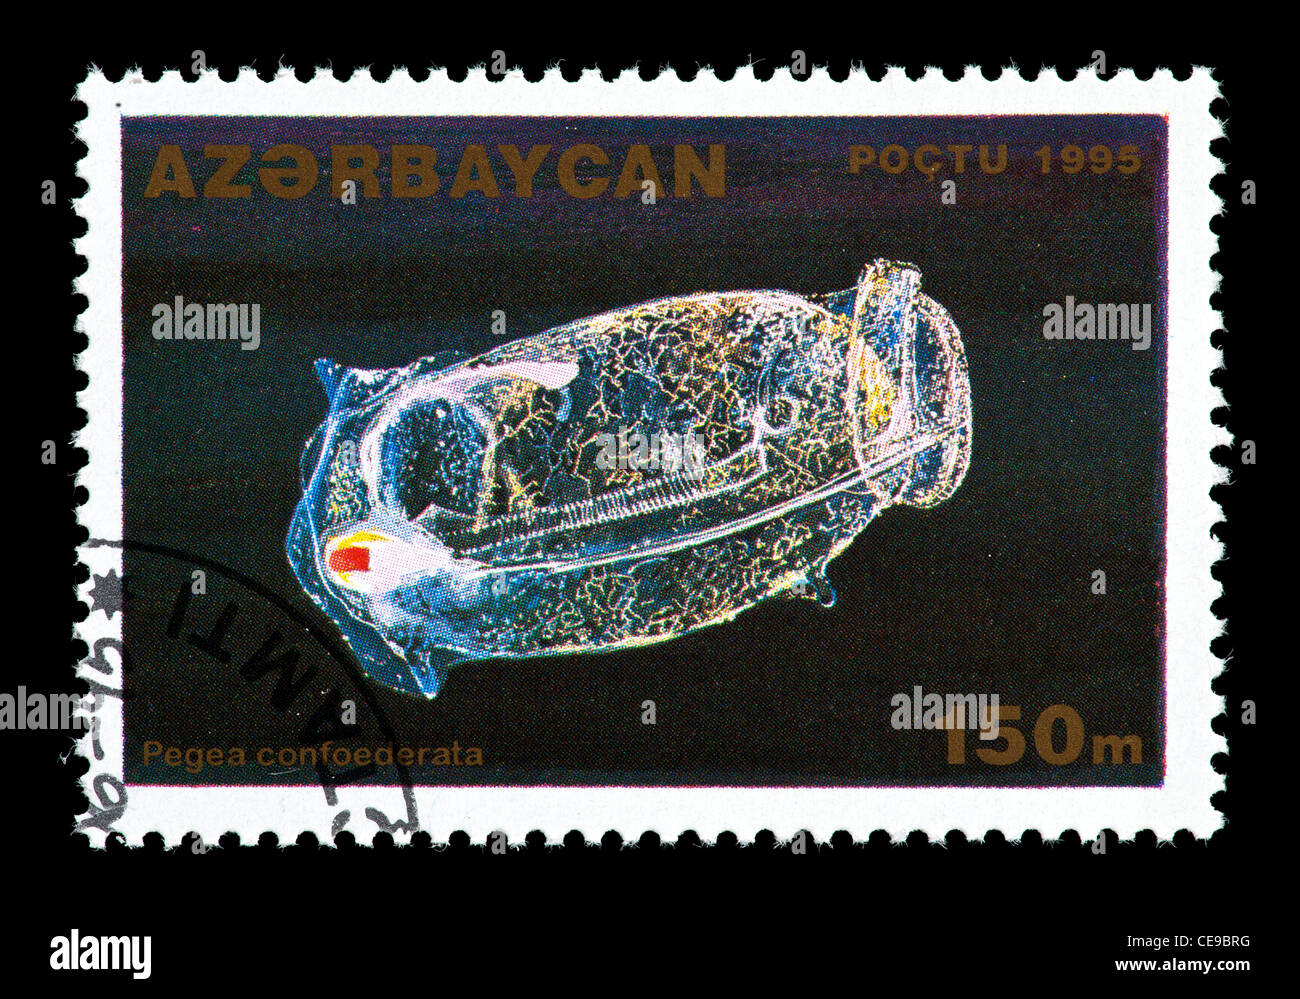 Postage stamp from Azerbaijan depicting a salp (Pegea confoederata) Stock Photo